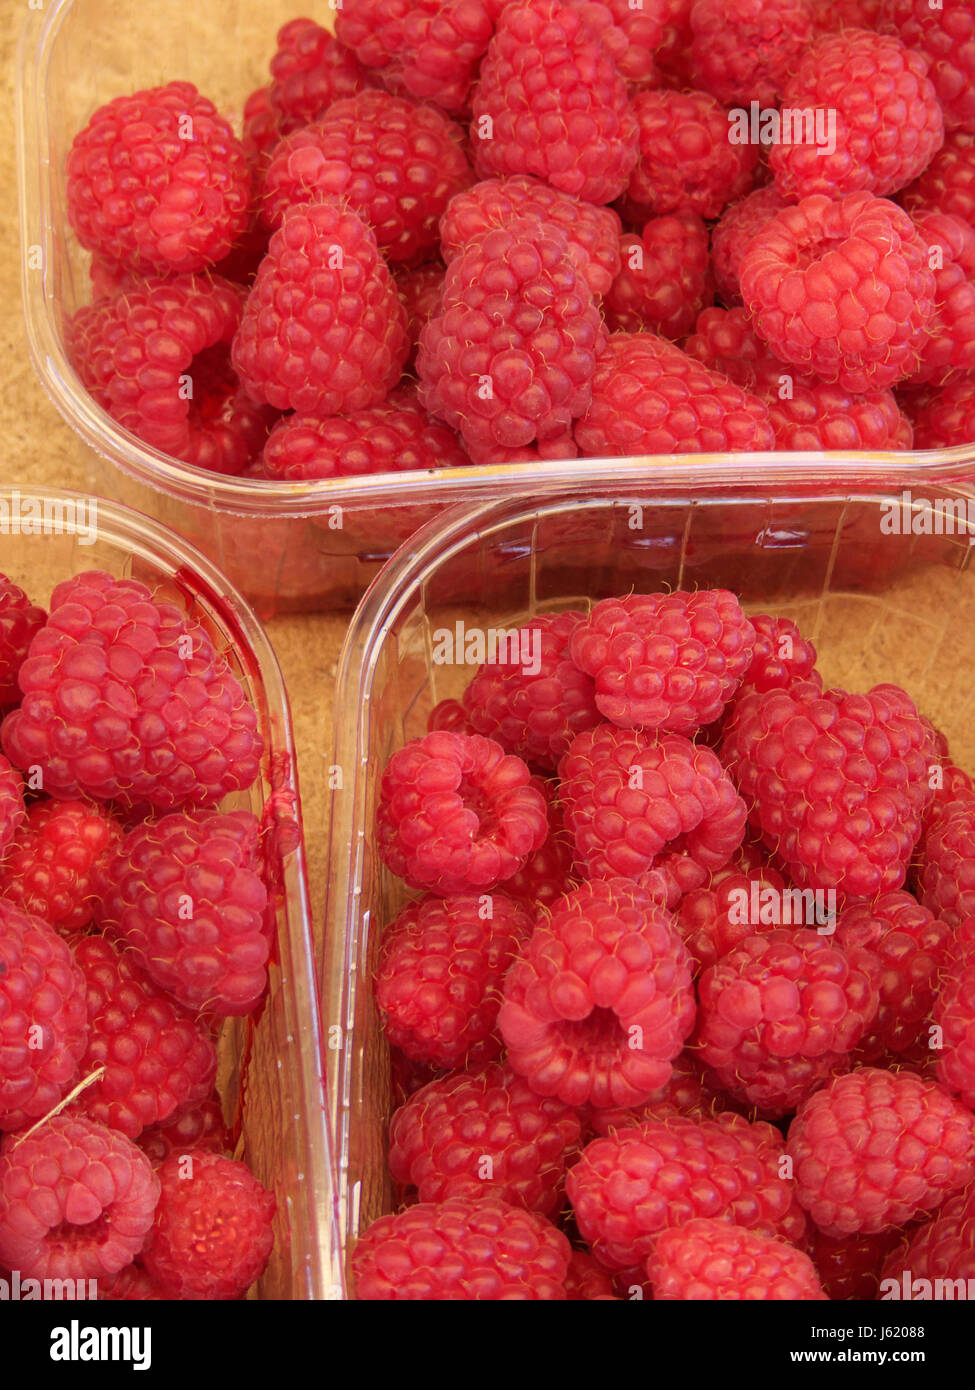 fruit berries raspberries light brown fruit aromatic berries rich in vitamins Stock Photo